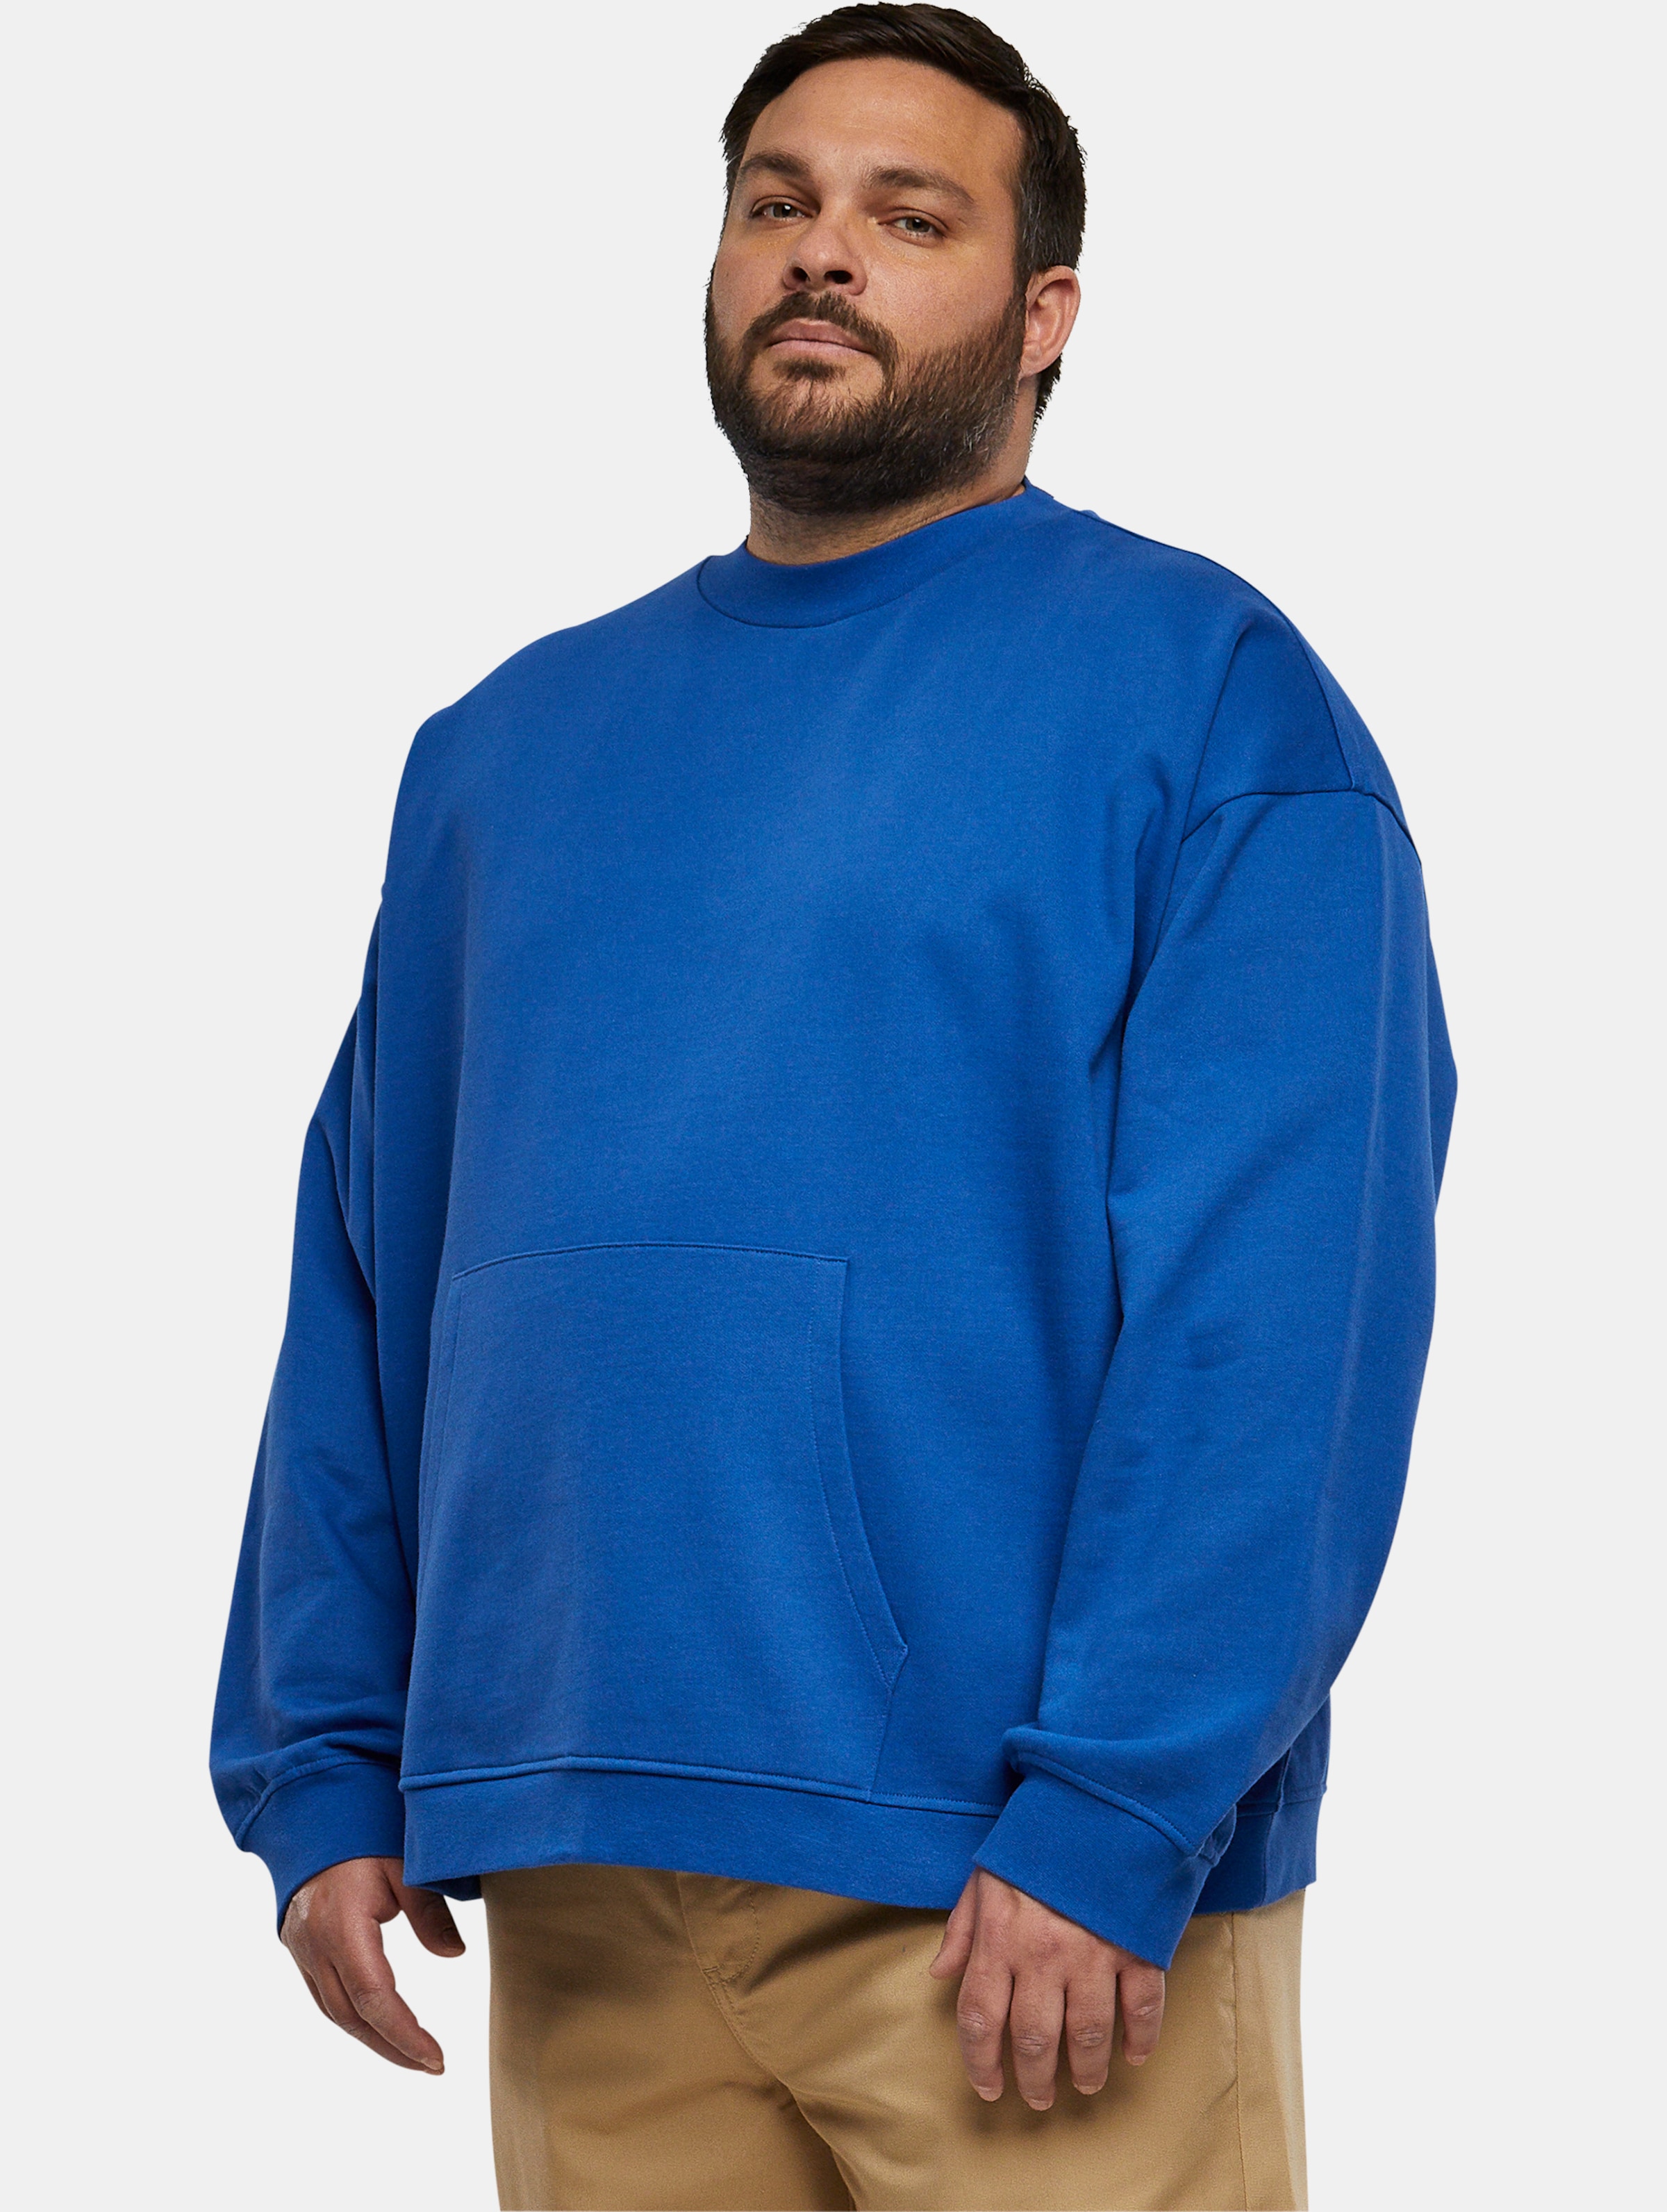 Urban Classics - Organic Boxy Pocket Crewneck sweater - 4XL - Blauw